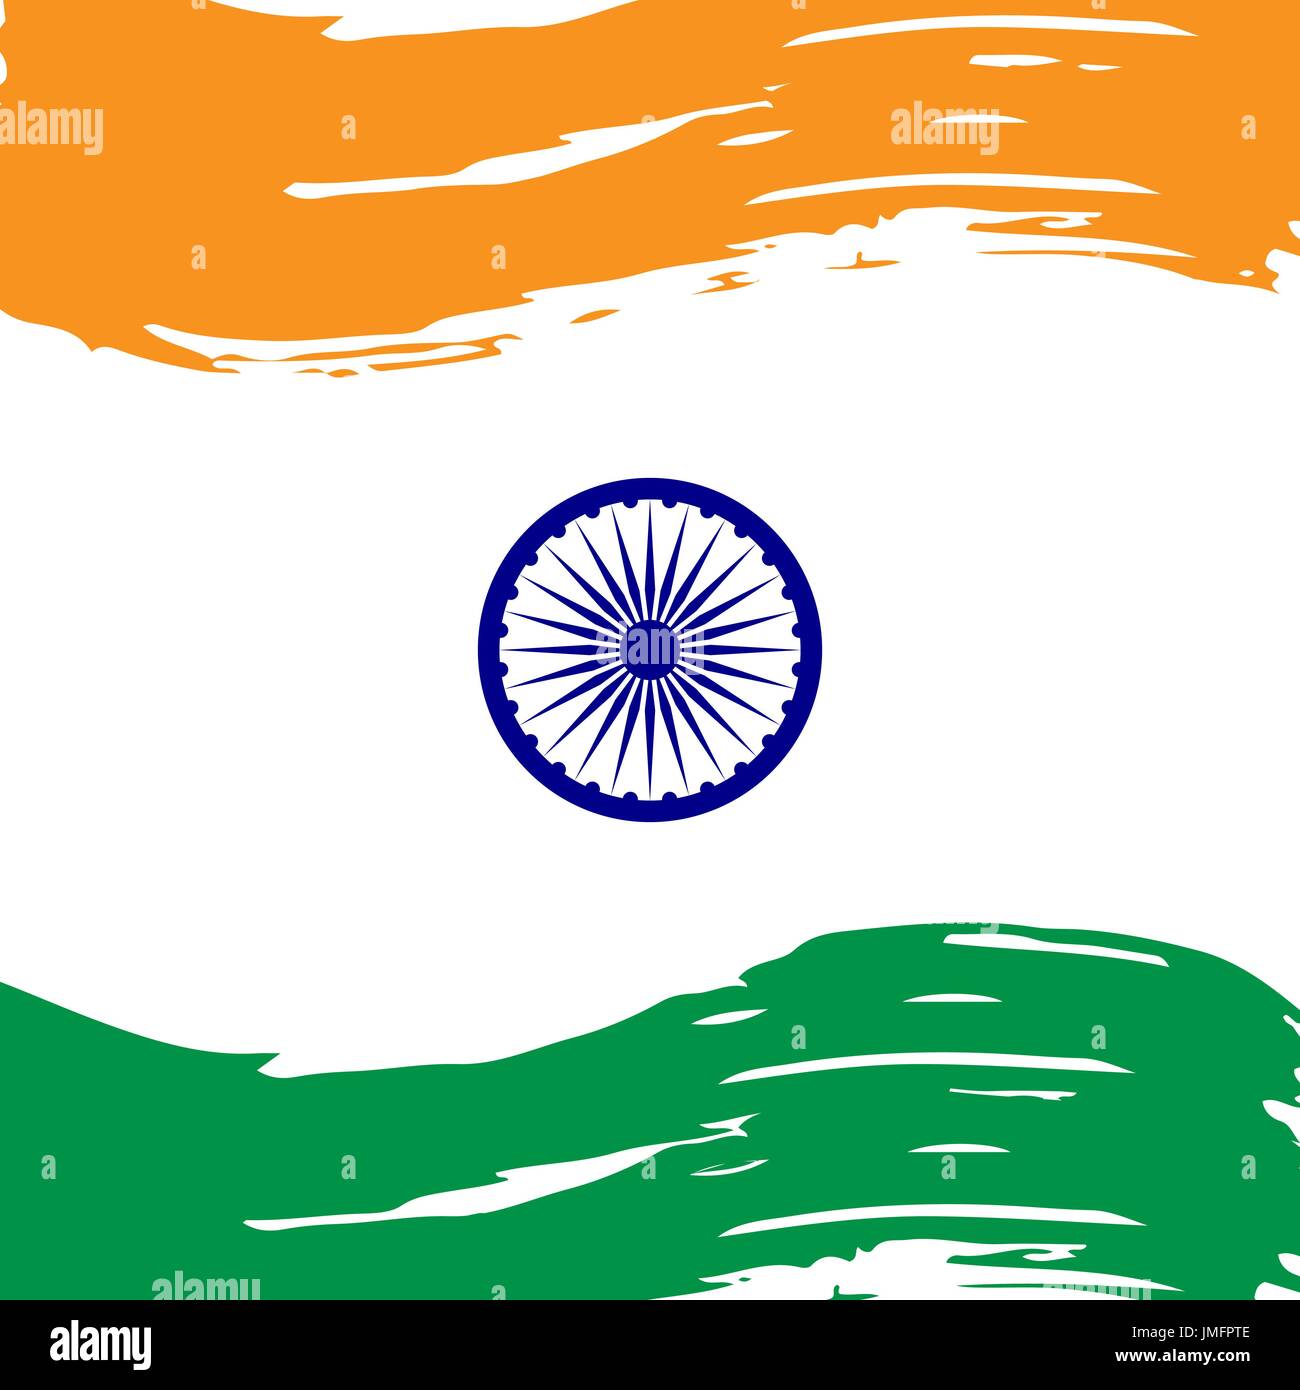 Indian Independence Day Konzept Hintergrund Stock Vektor